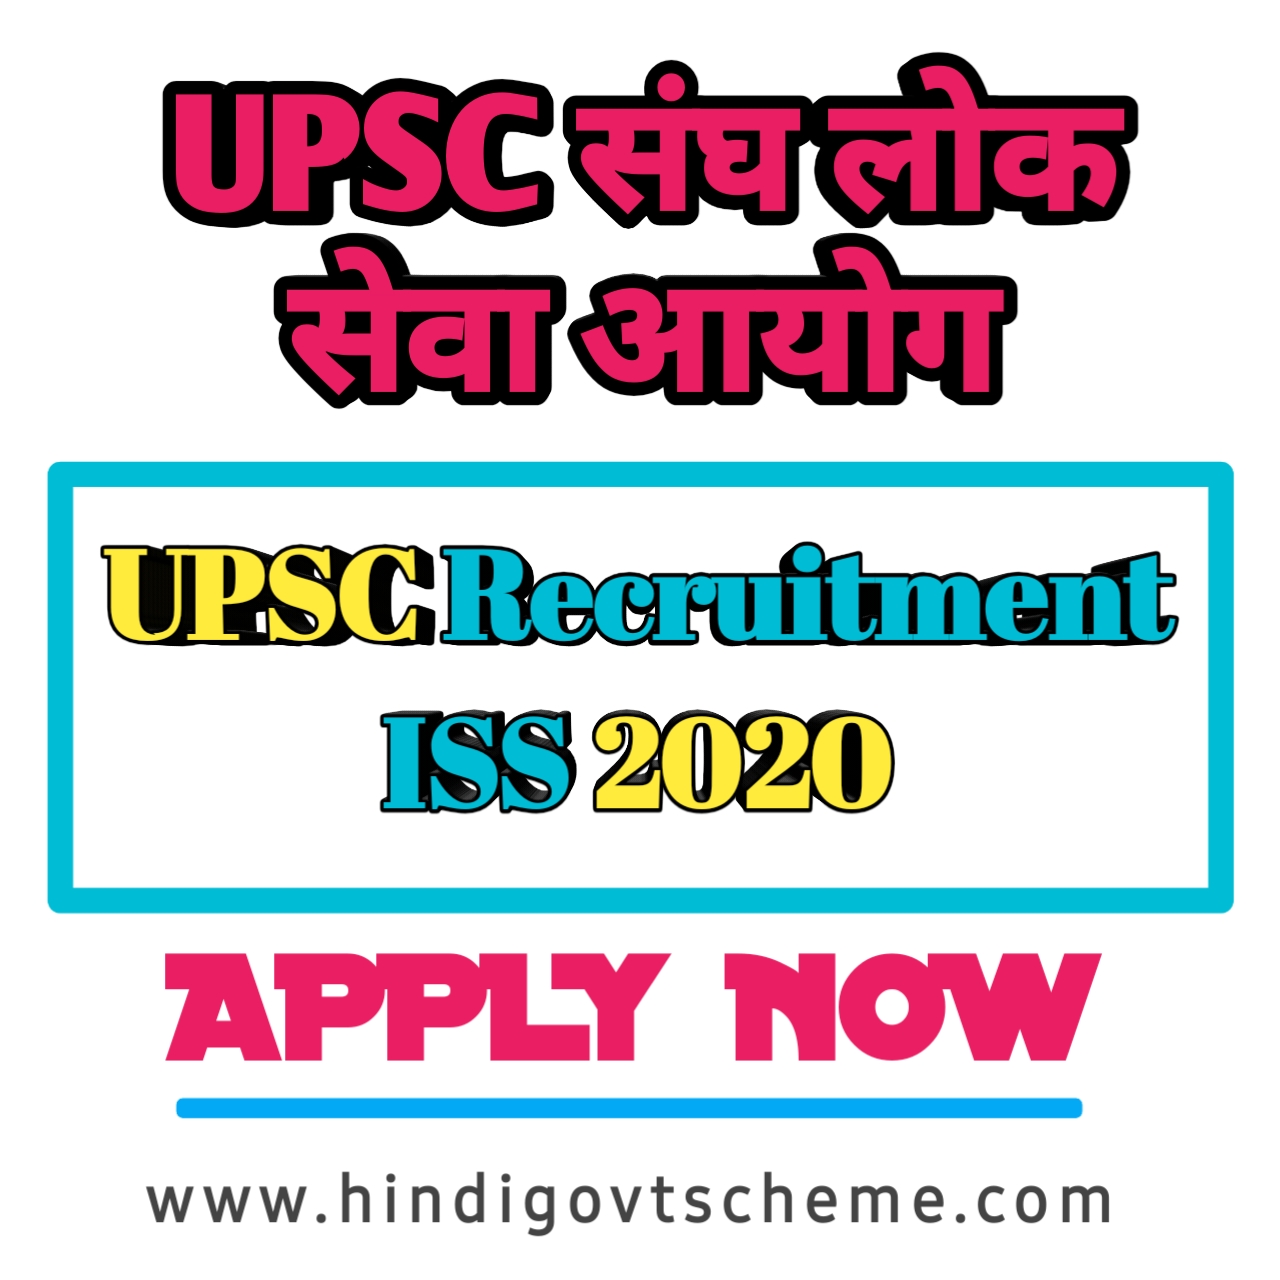 UPSC Recruitment ISS 2020